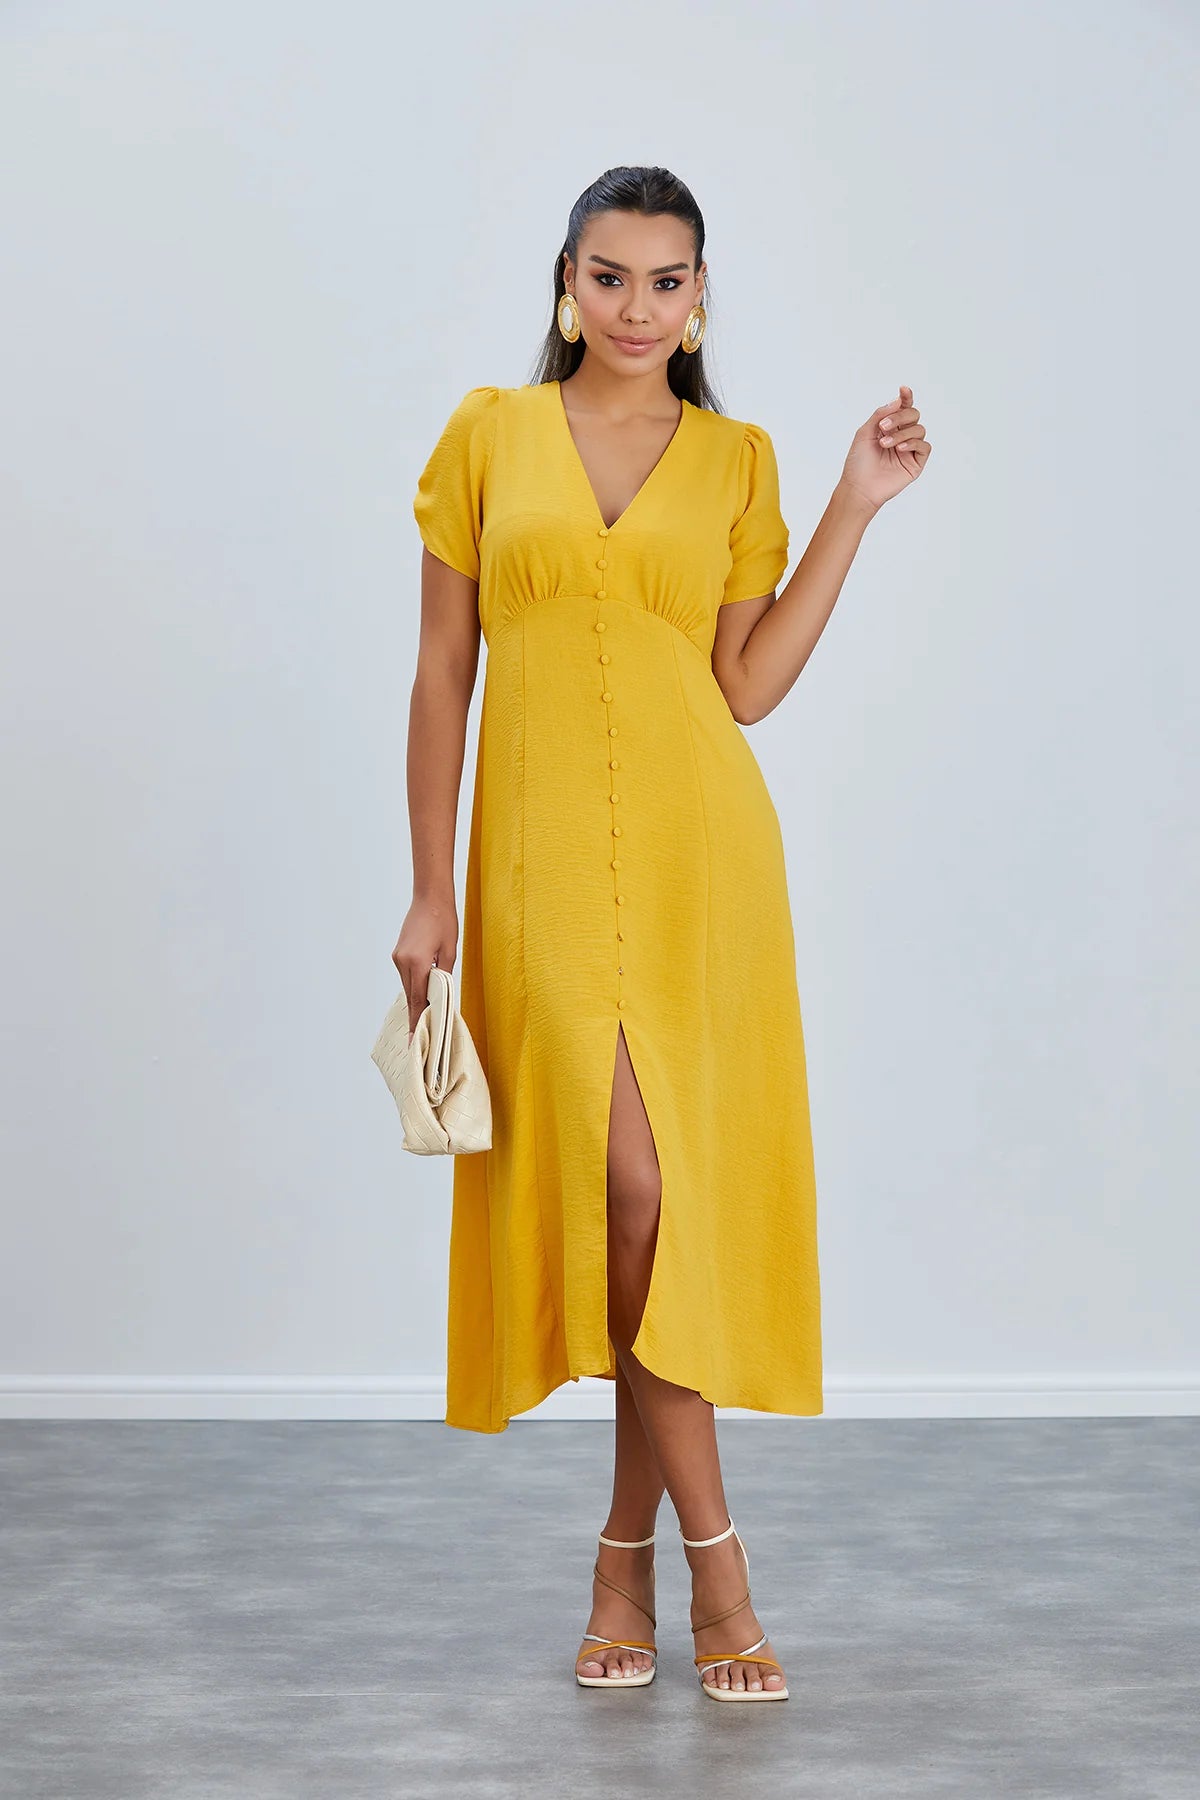 jenerique-button-front-yellow-midi-dress